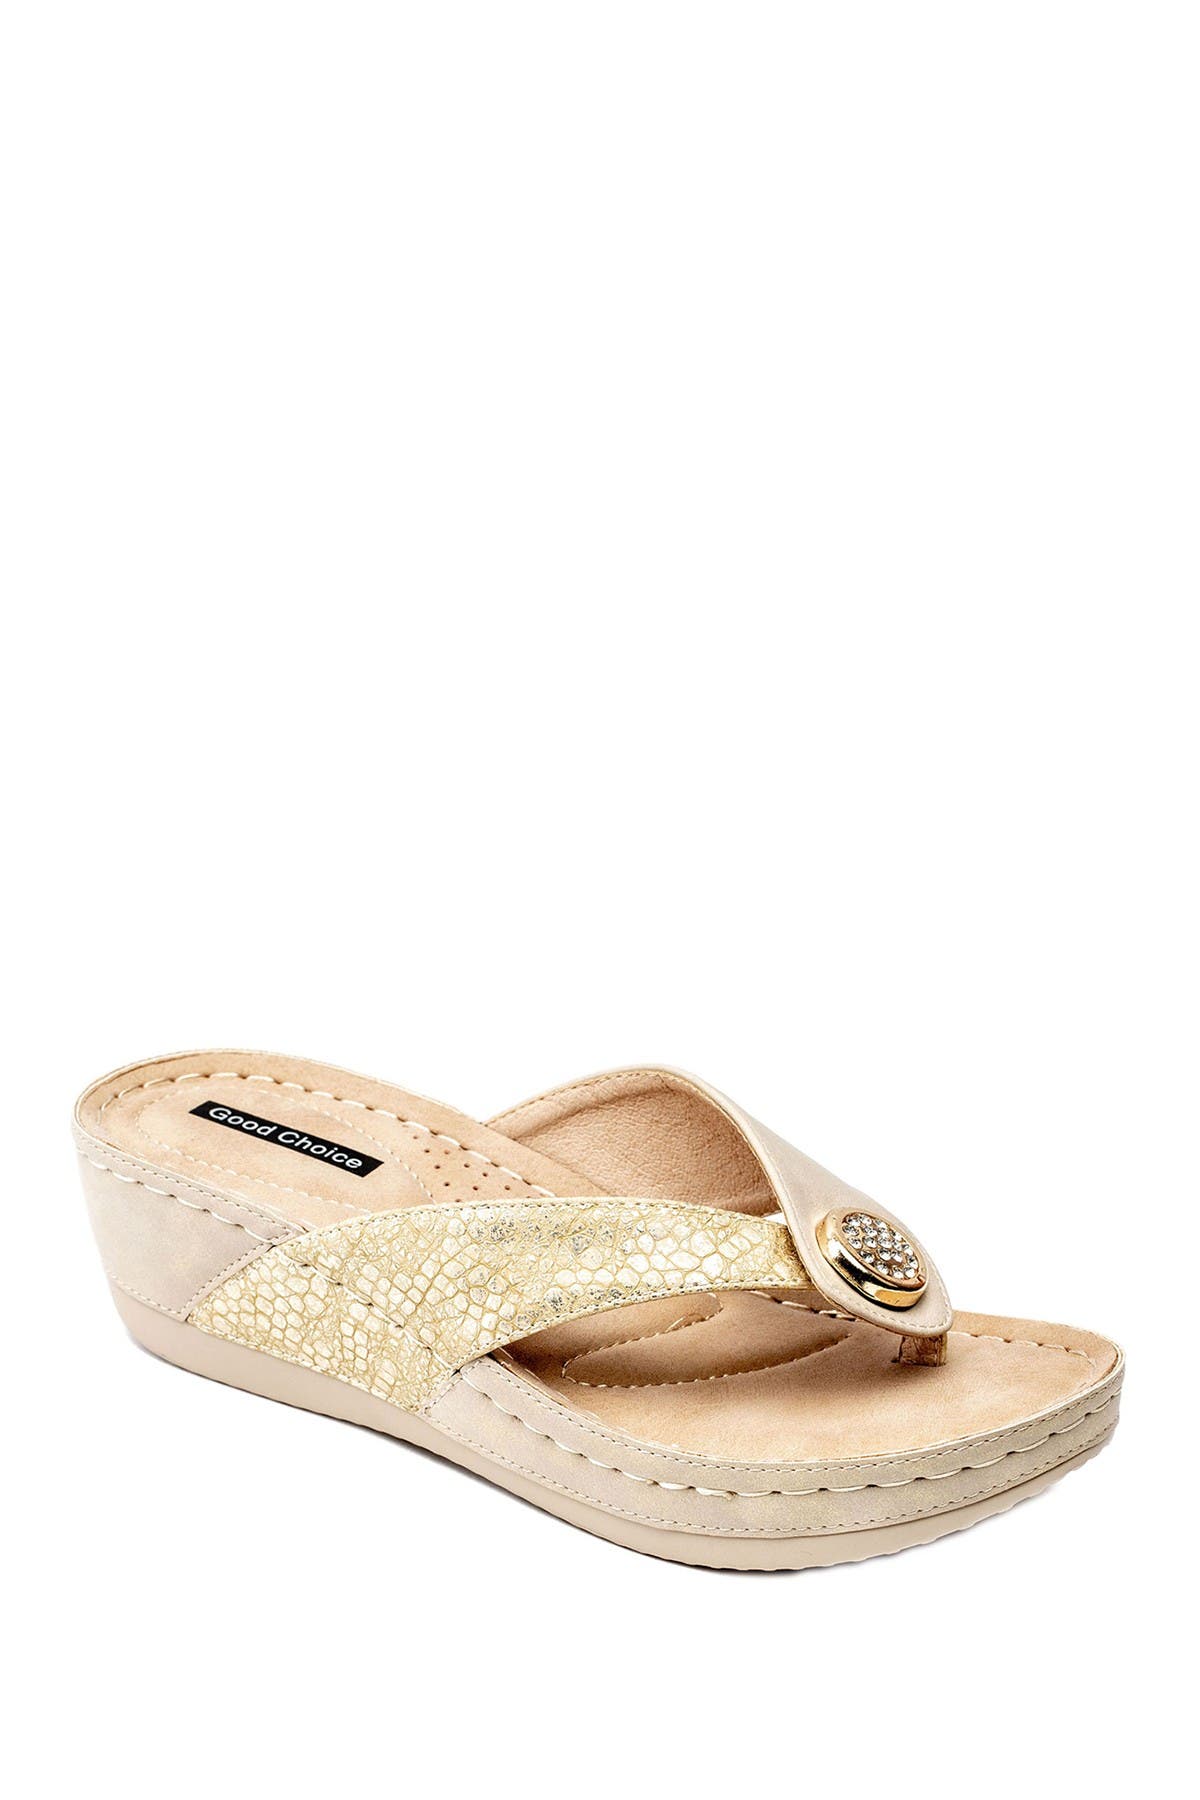 Good Choice New York Dafni Snake Embossed Thong Wedge Sandal In Gold